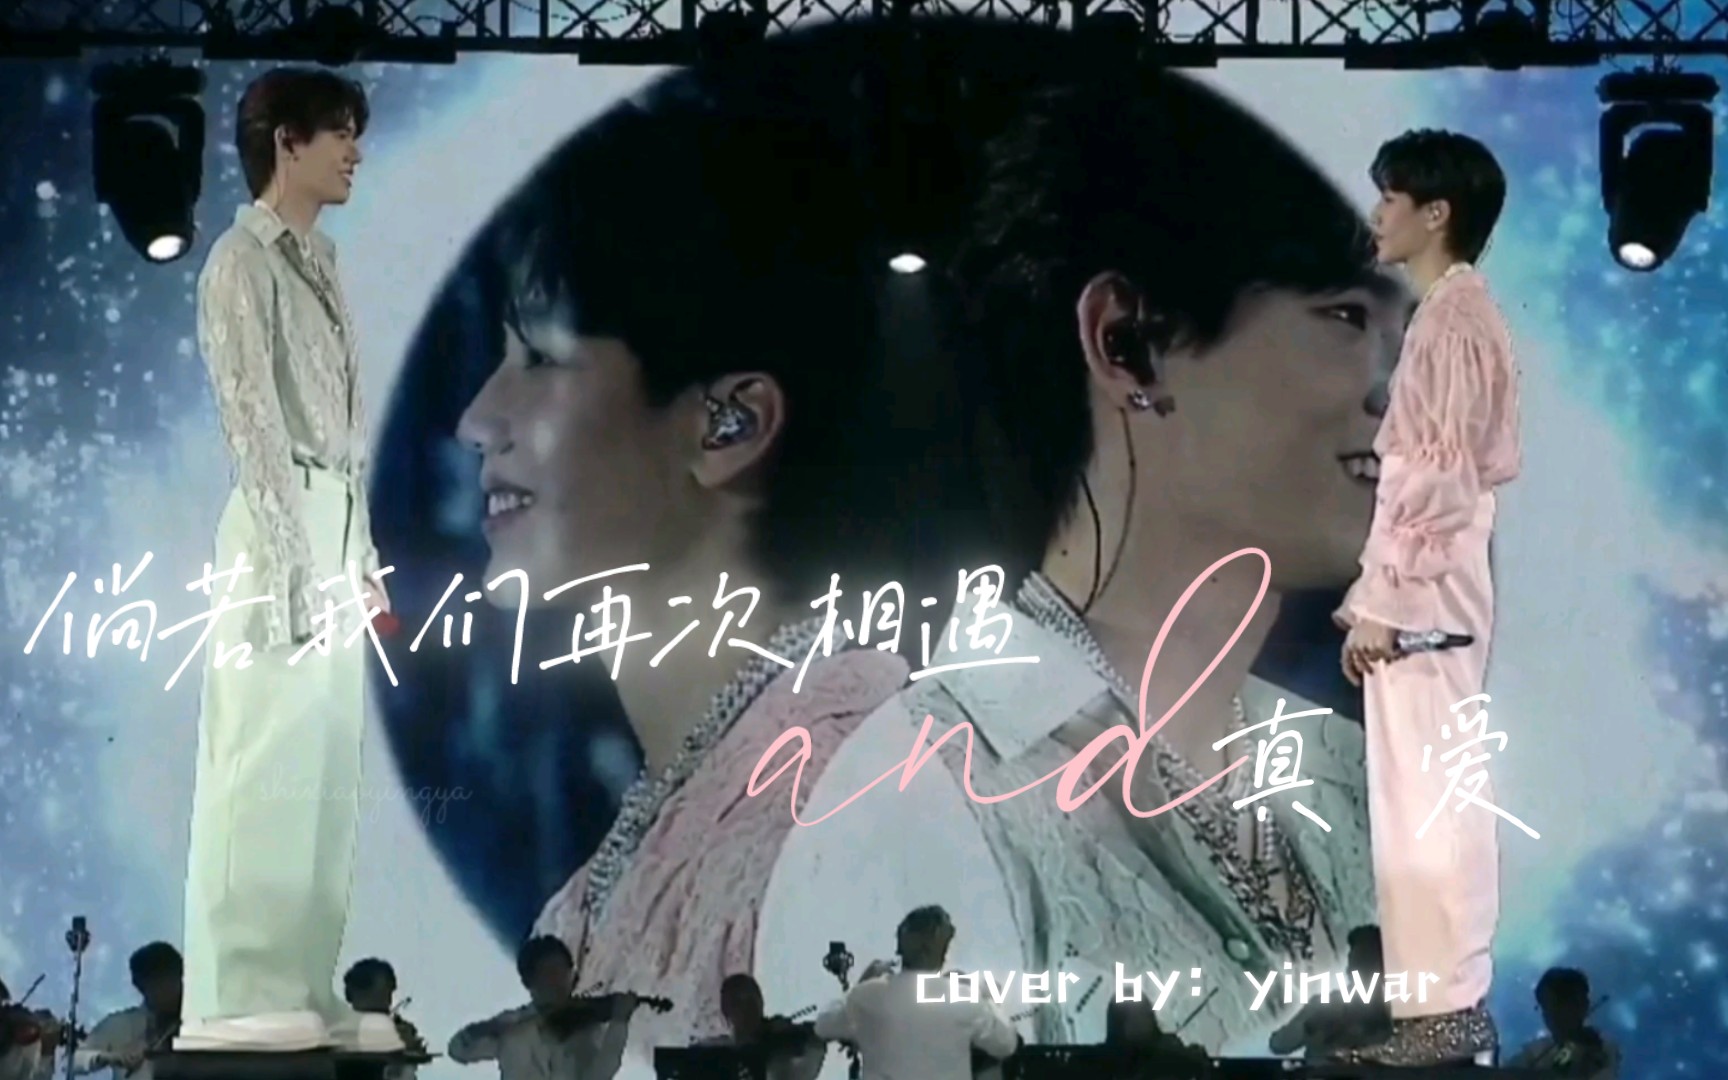 【YINWAR1224平安夜演唱会|歌曲cut】《倘若我们再次相遇+真爱》-yinwar